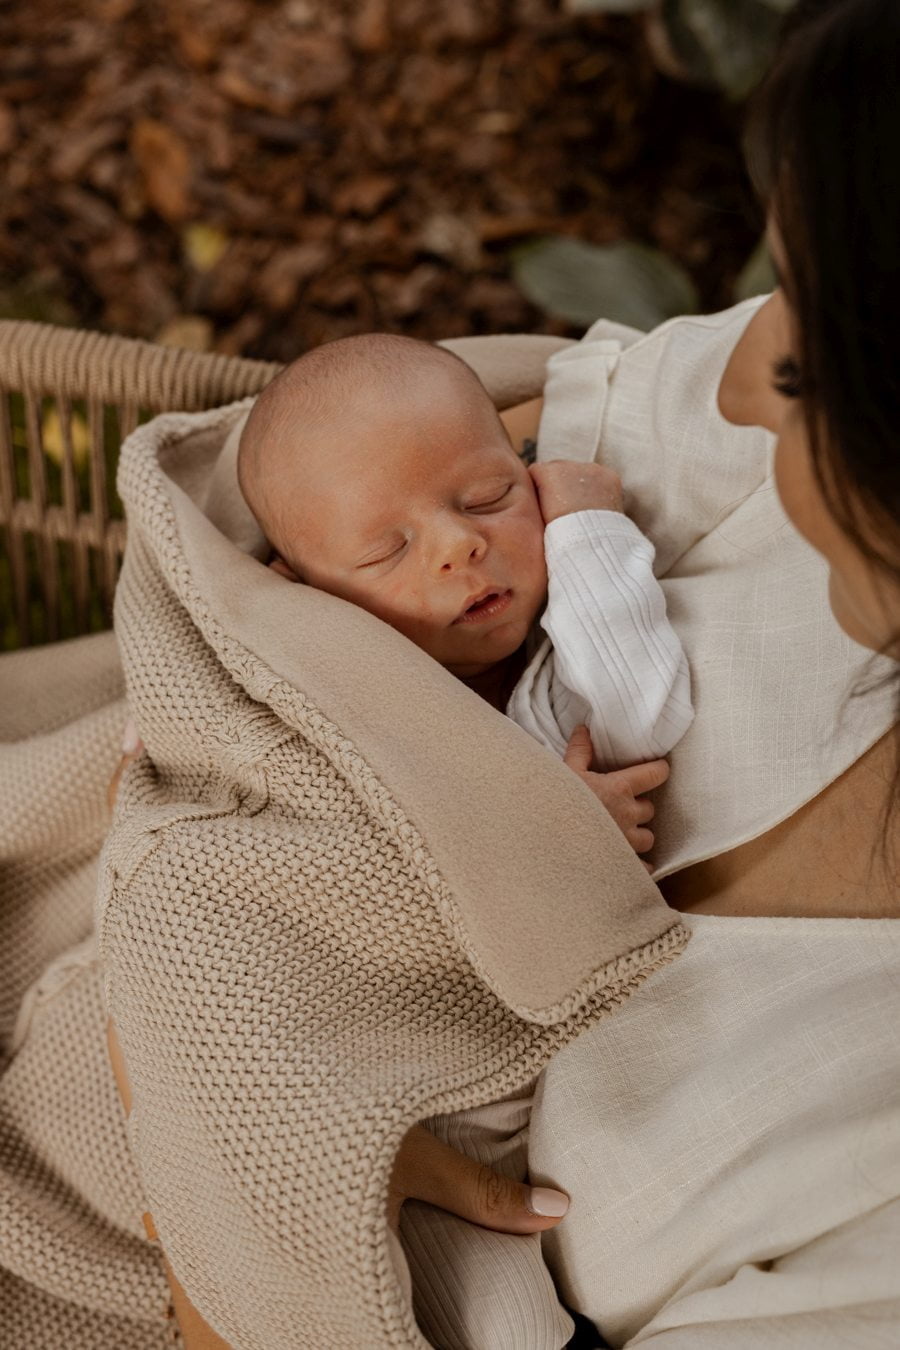 Warm Cotton Fleece Lined Baby Blanket Nico Cappuccino